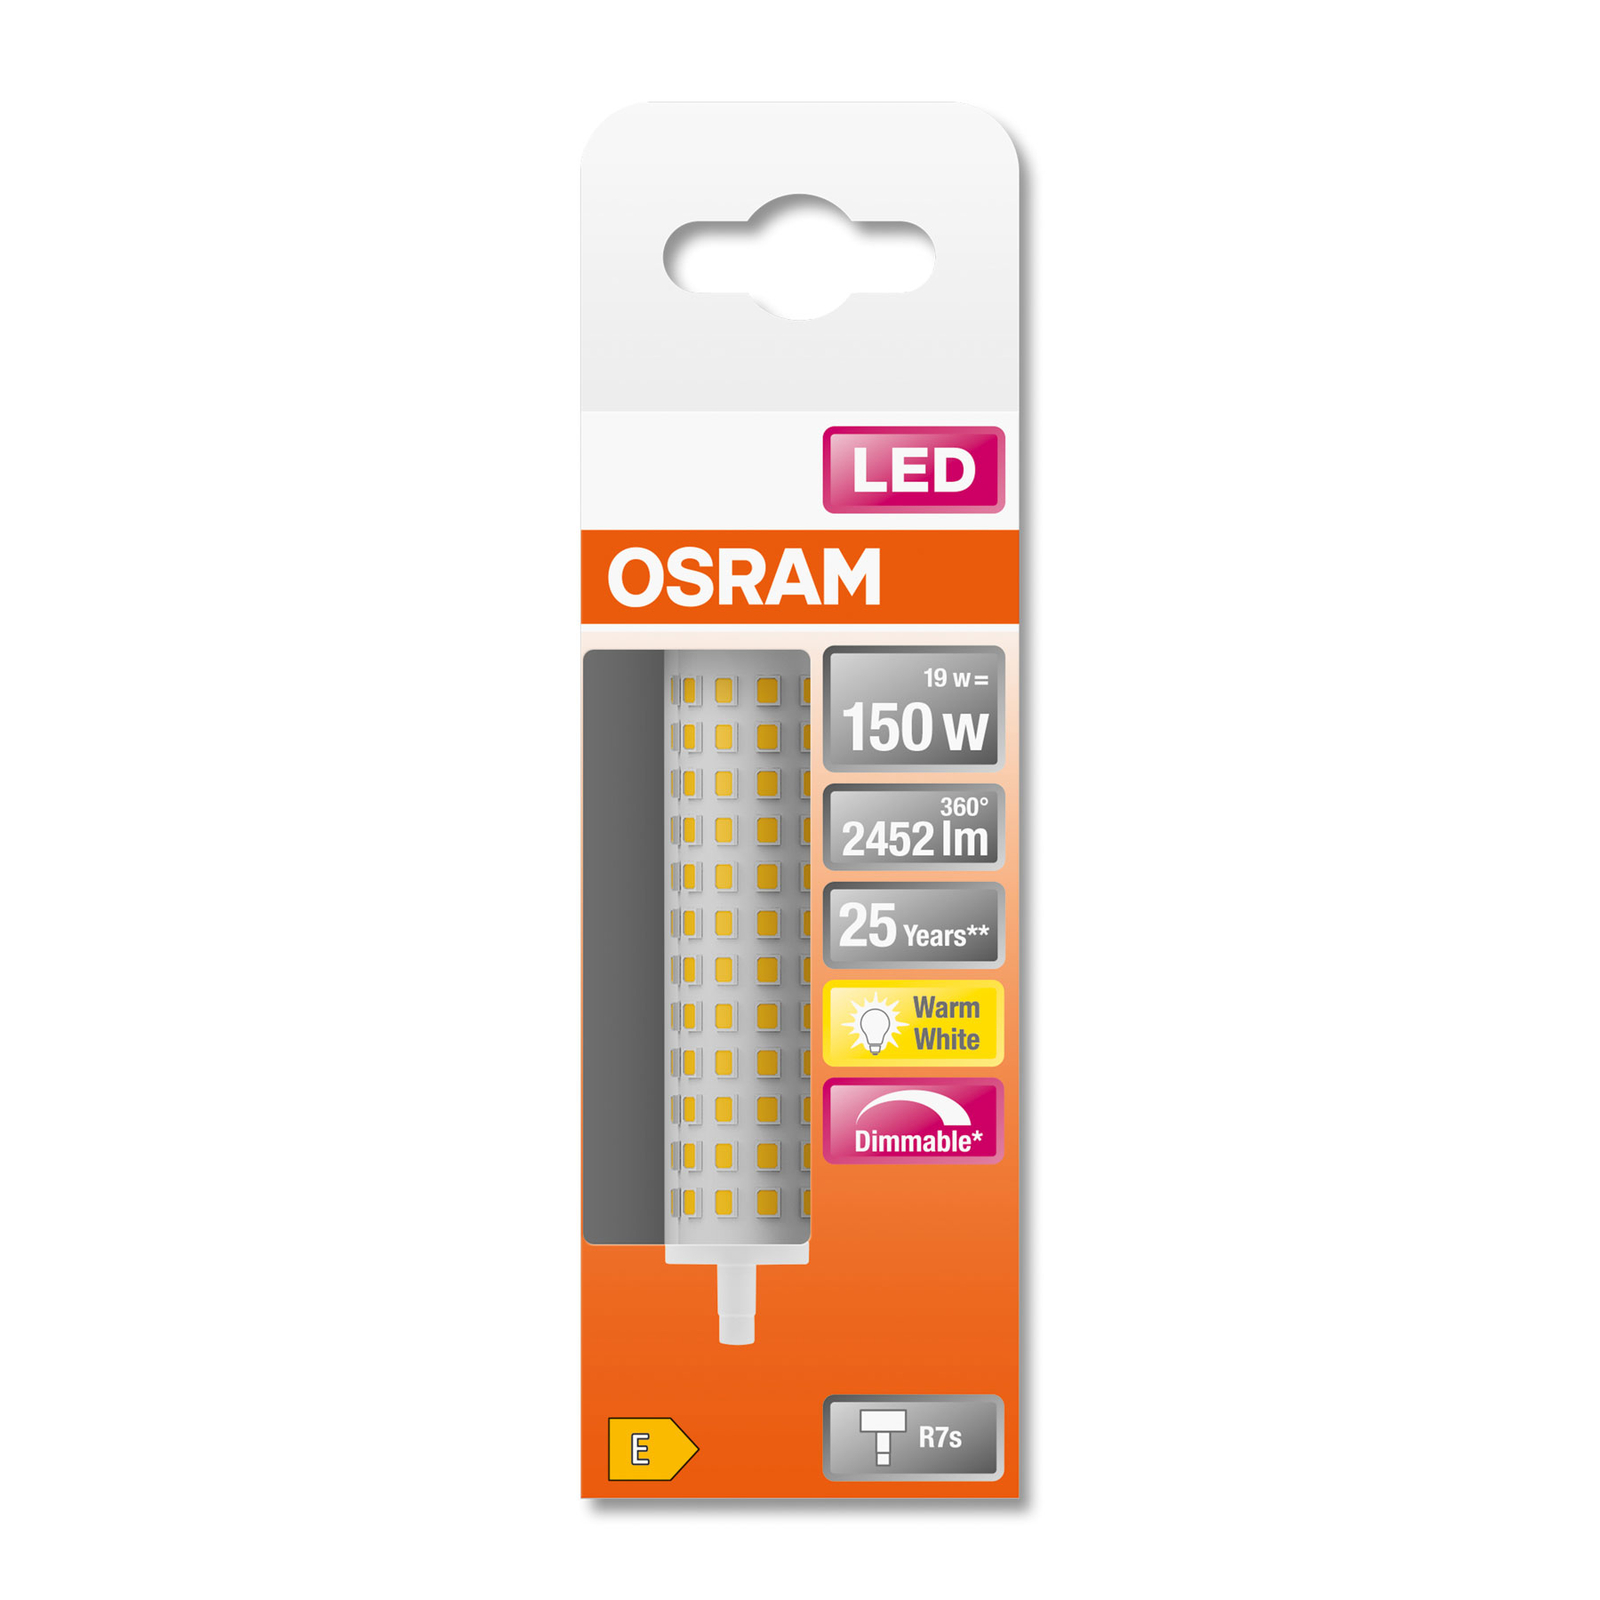 Vorming Spin nationalisme OSRAM LED lamp R7s 19W 2.700K dimbaar | Lampen24.be